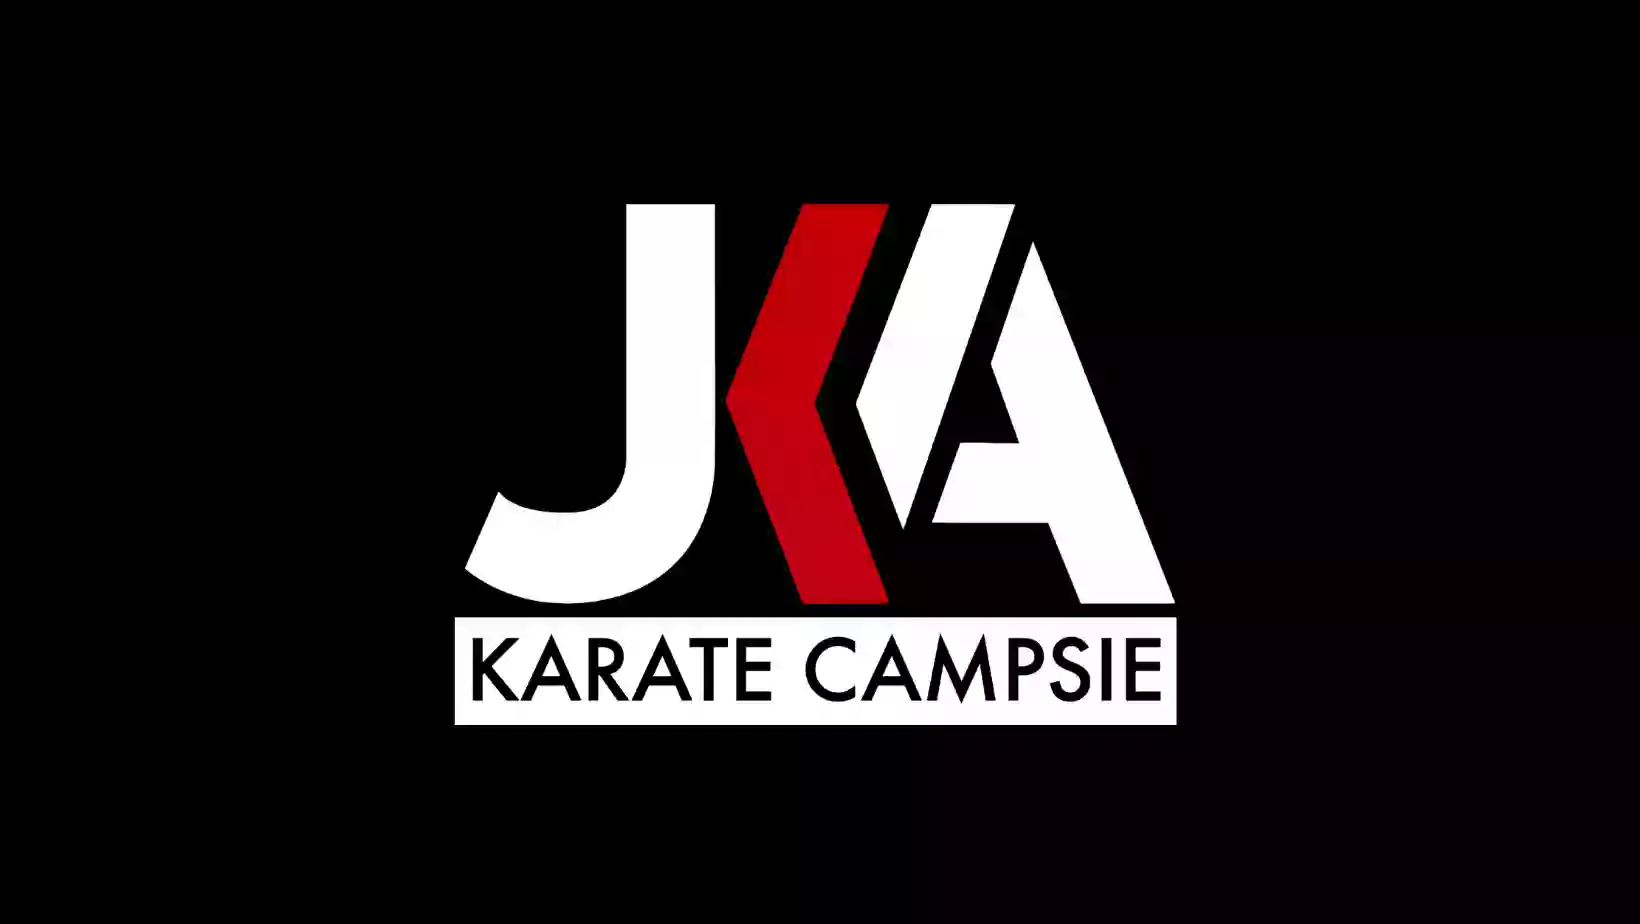 JKA Karate Sydney - Campsie